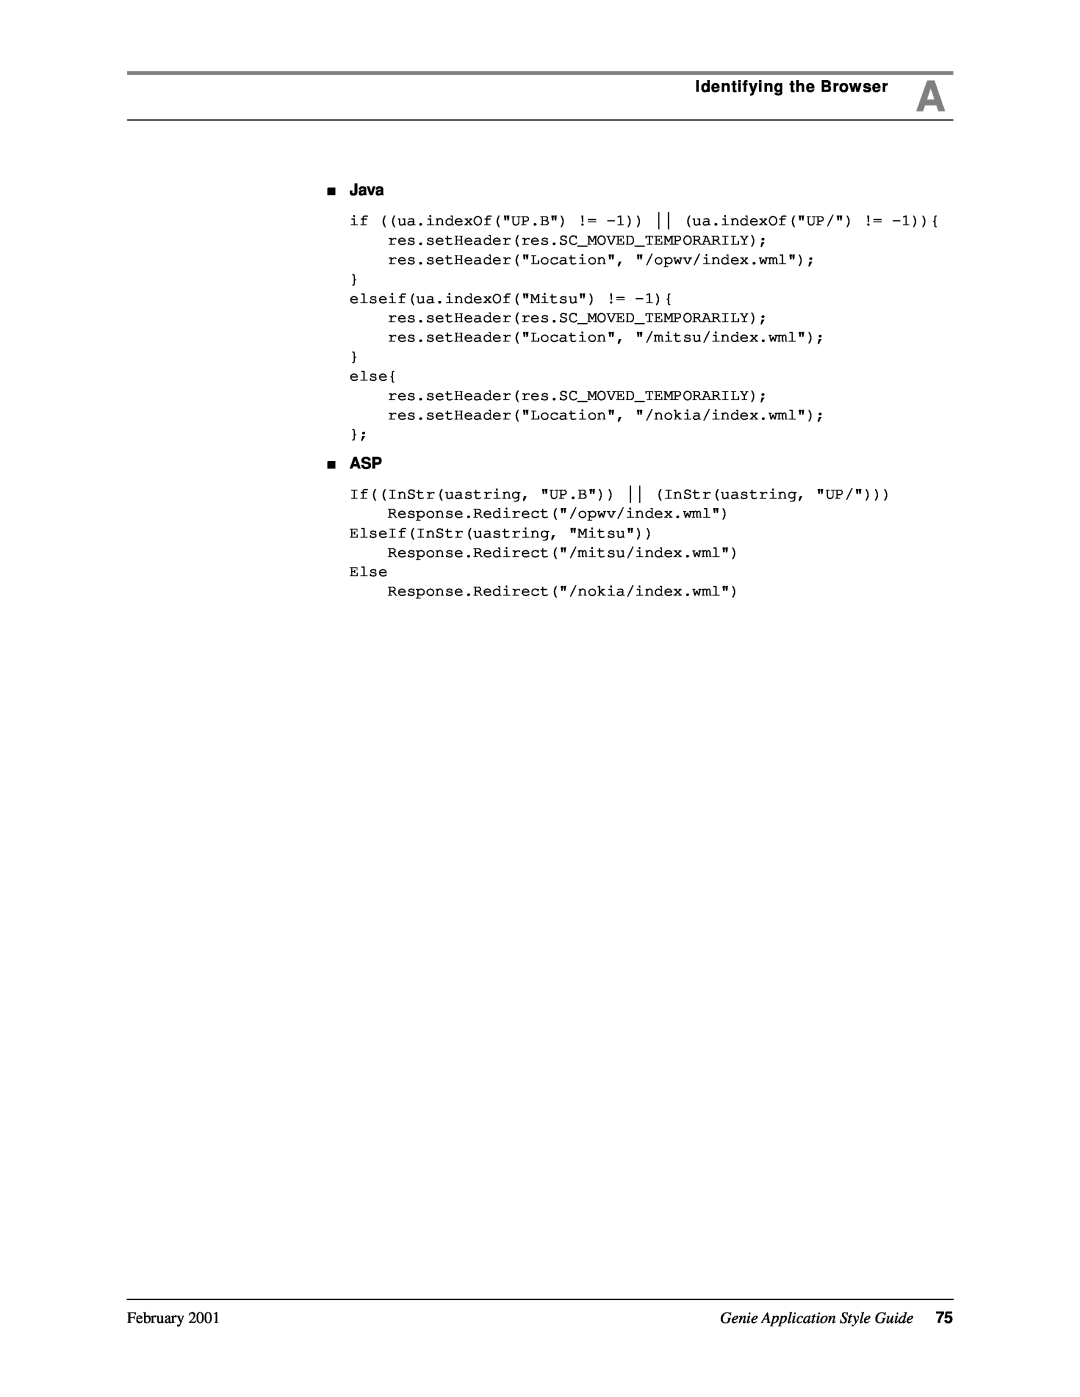 Genie 7110 manual Identifying the Browser A Java, ElseIfInStruastring, Mitsu Response.Redirect/mitsu/index.wml Else 